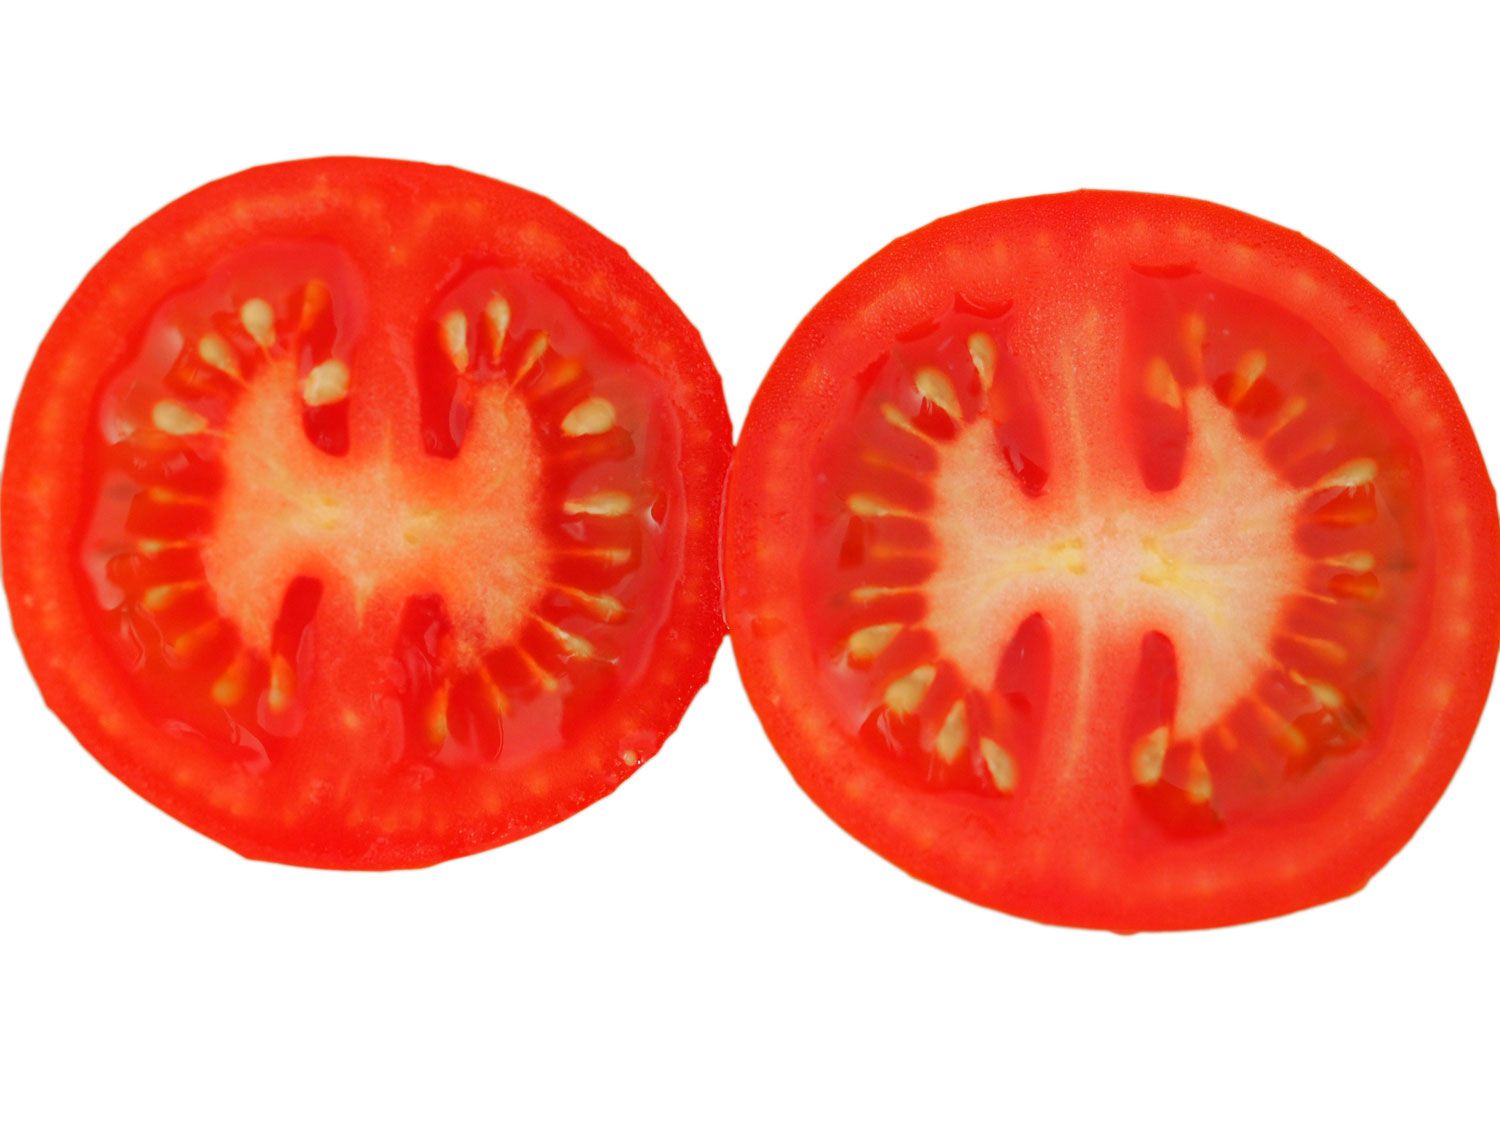 20140719-tomato-test-cherry-cut-open-daniel-gritzer.JPG